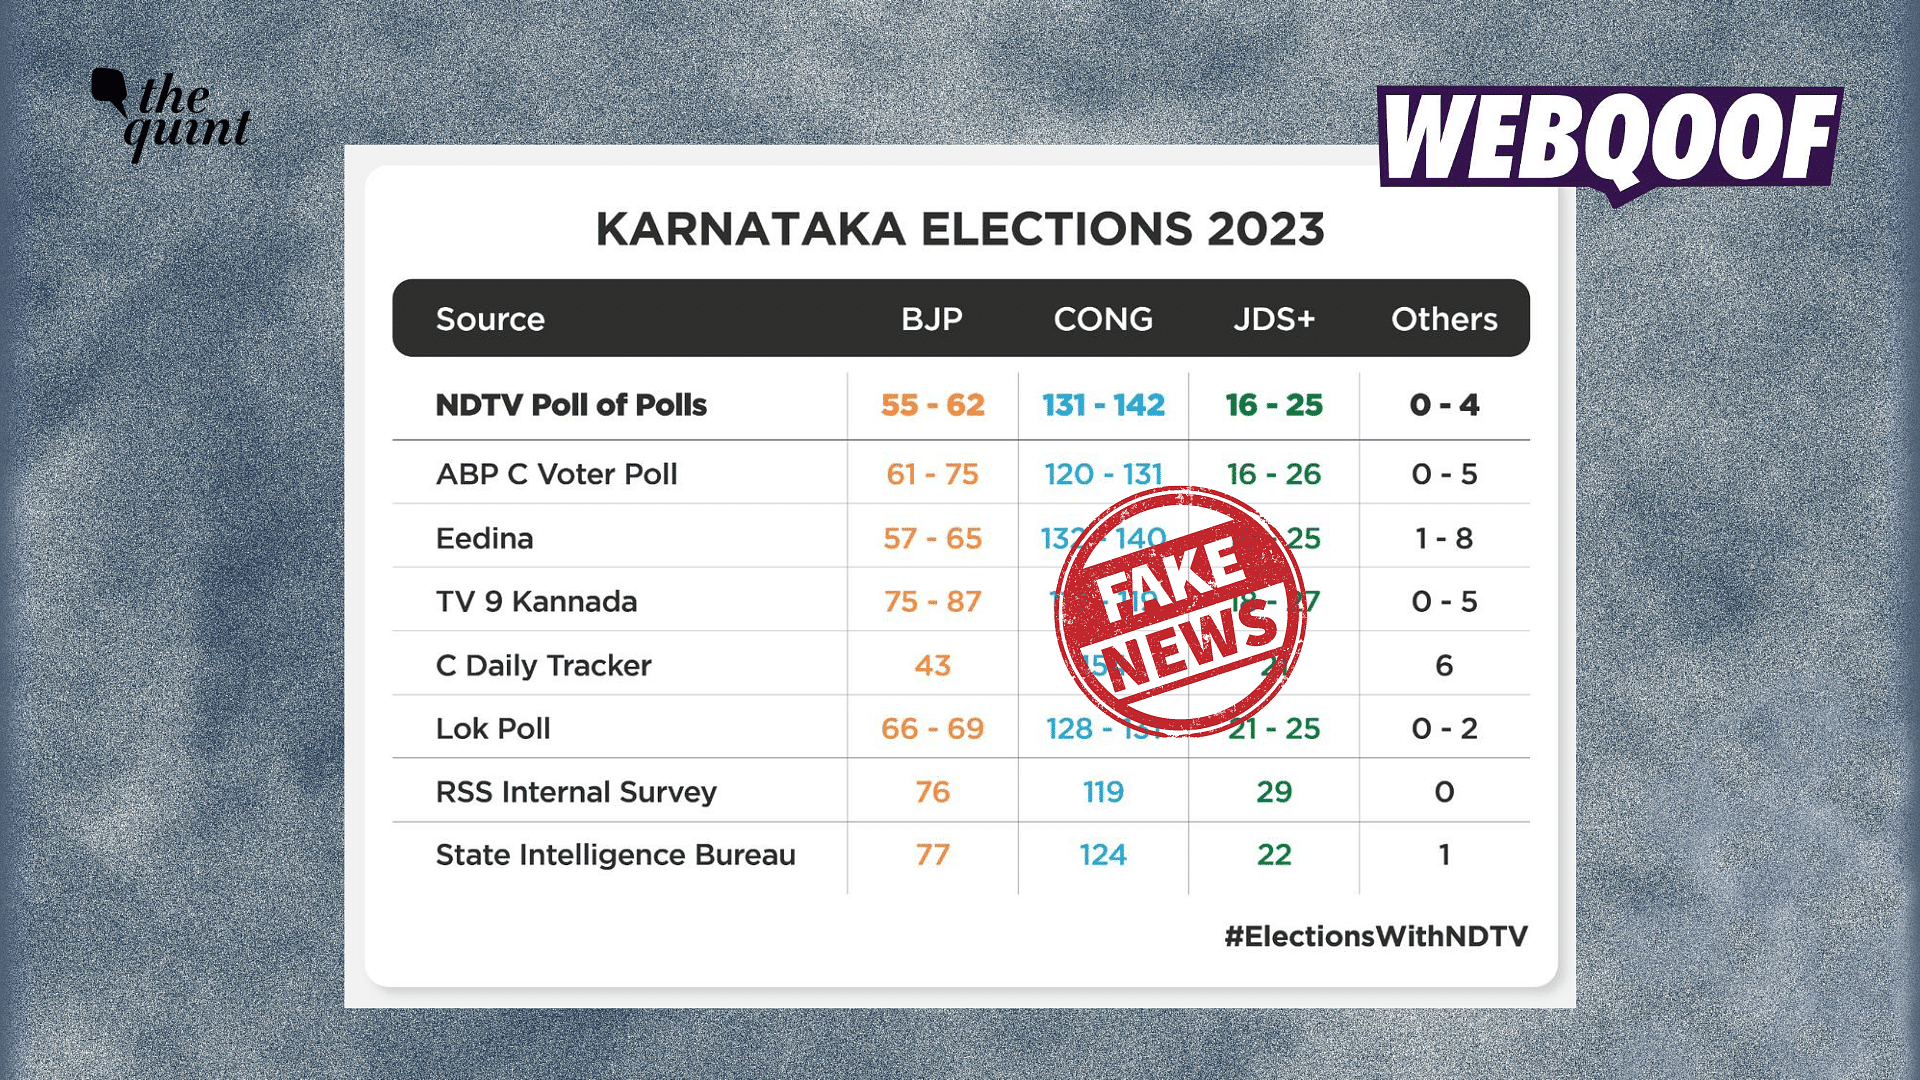 FactCheck NDTV Did Not Predict ‘BJP’s Biggest Loss’ in Karnataka